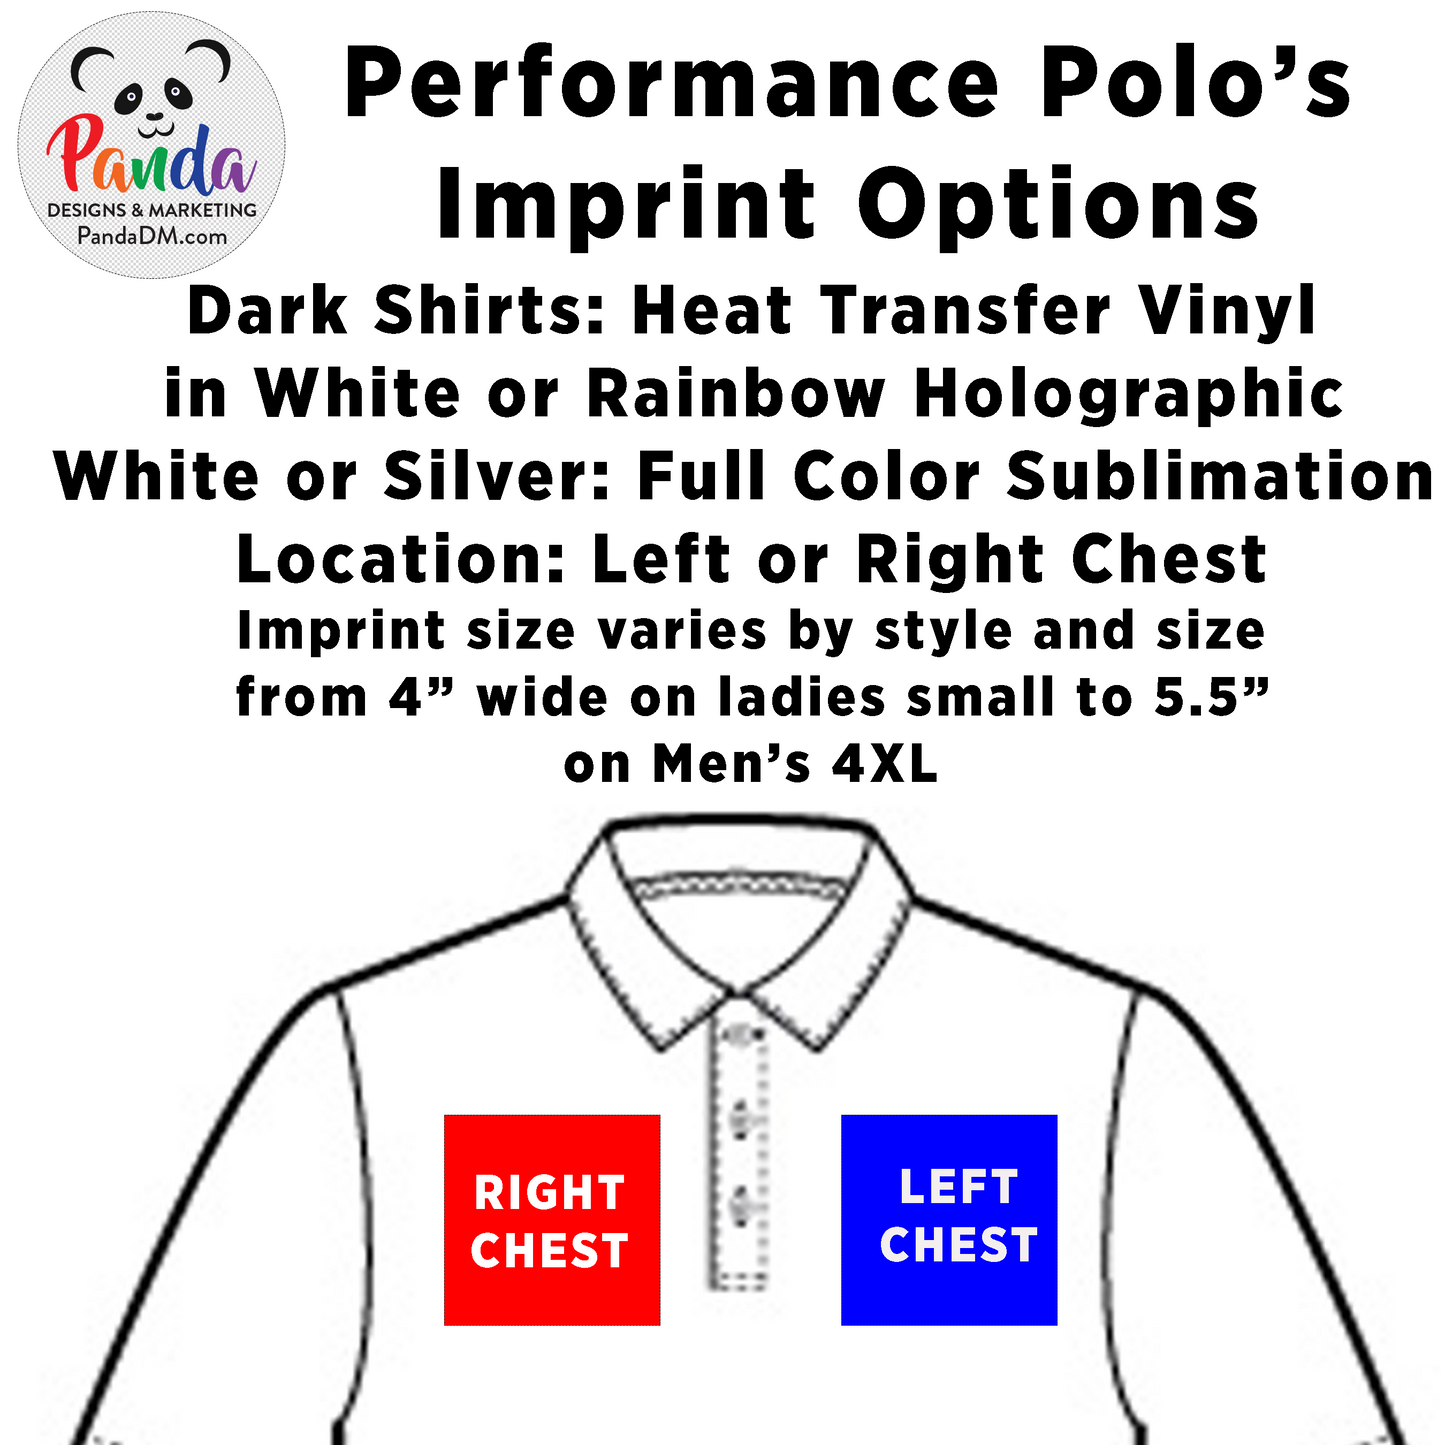 Performance Polos - Defense of Democracy - Dark Colored Shirts